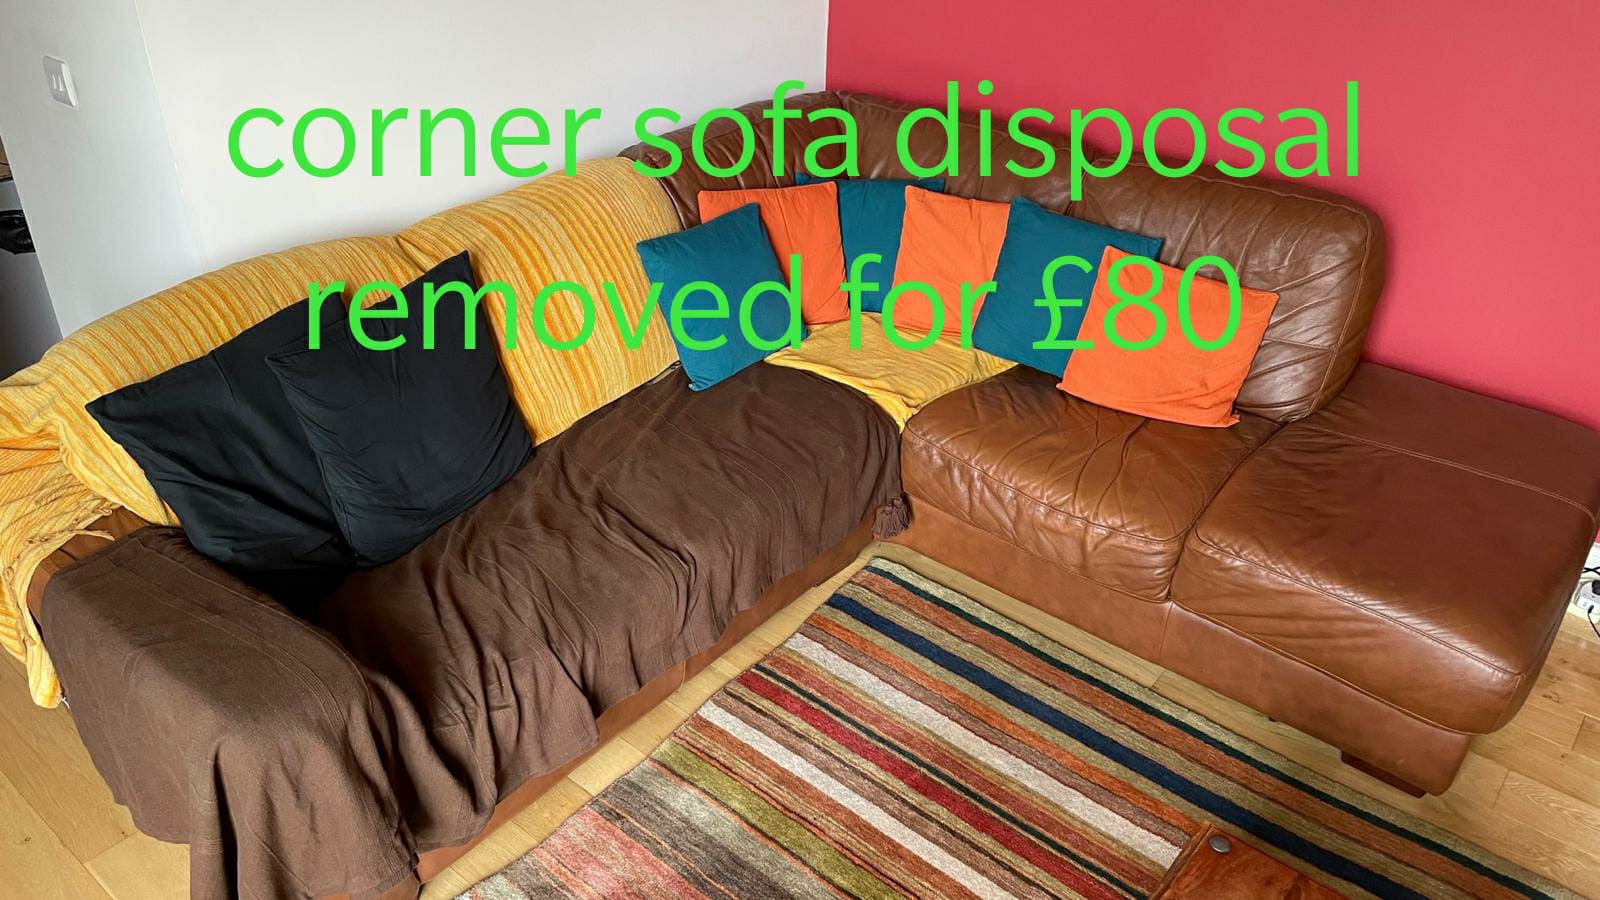 rubbish-corner-sofa-disposal-glasgow.jpeg